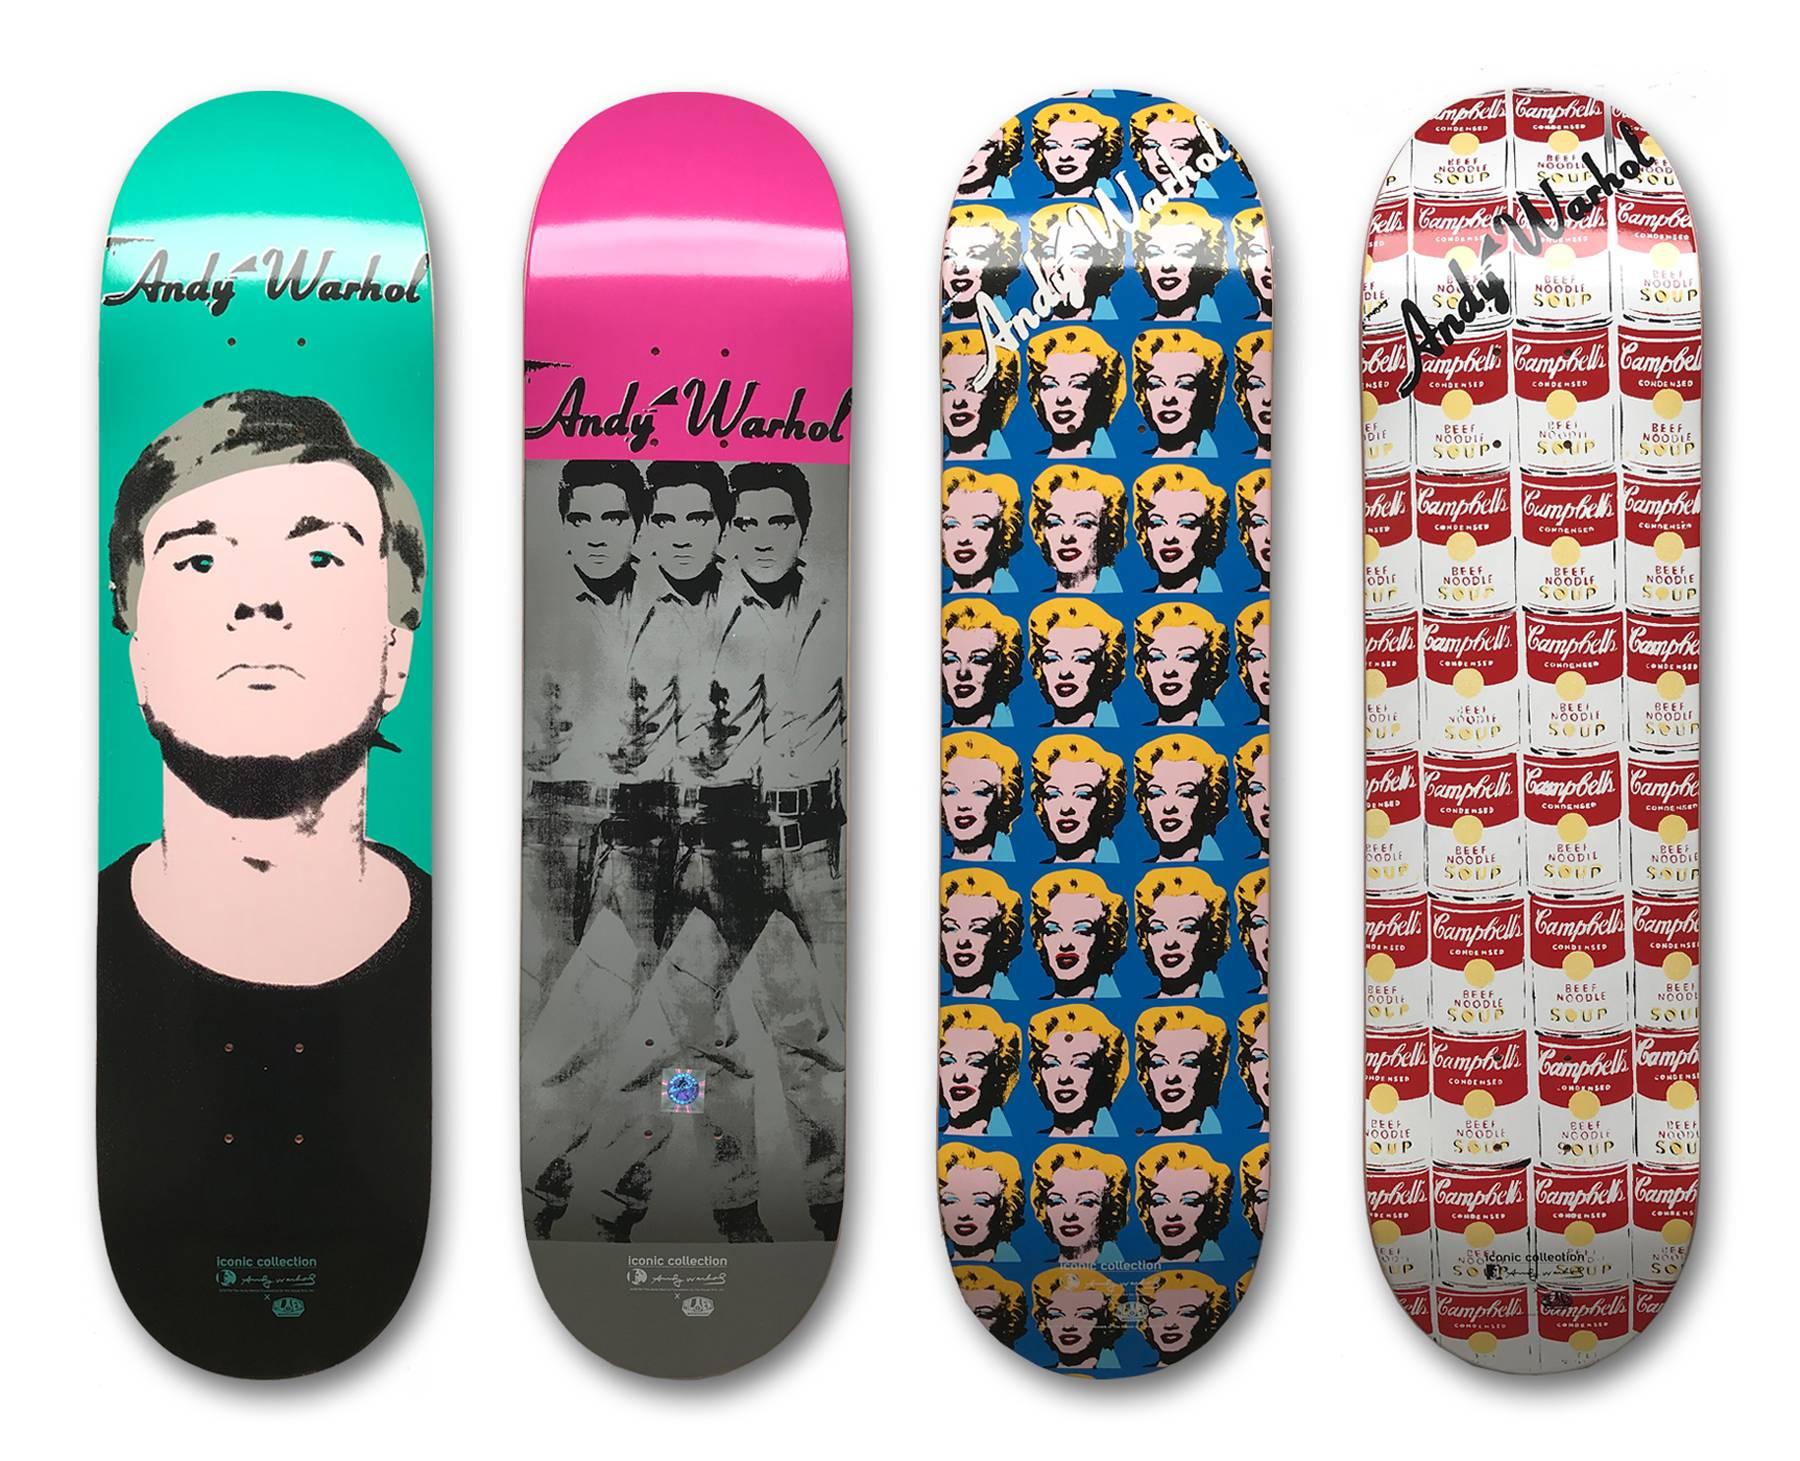 (after) Andy Warhol Figurative Print - Set of 4 Skateboard Decks (Marilyn, Warhol Portrait, Elvis, Campbells Soup Cans)